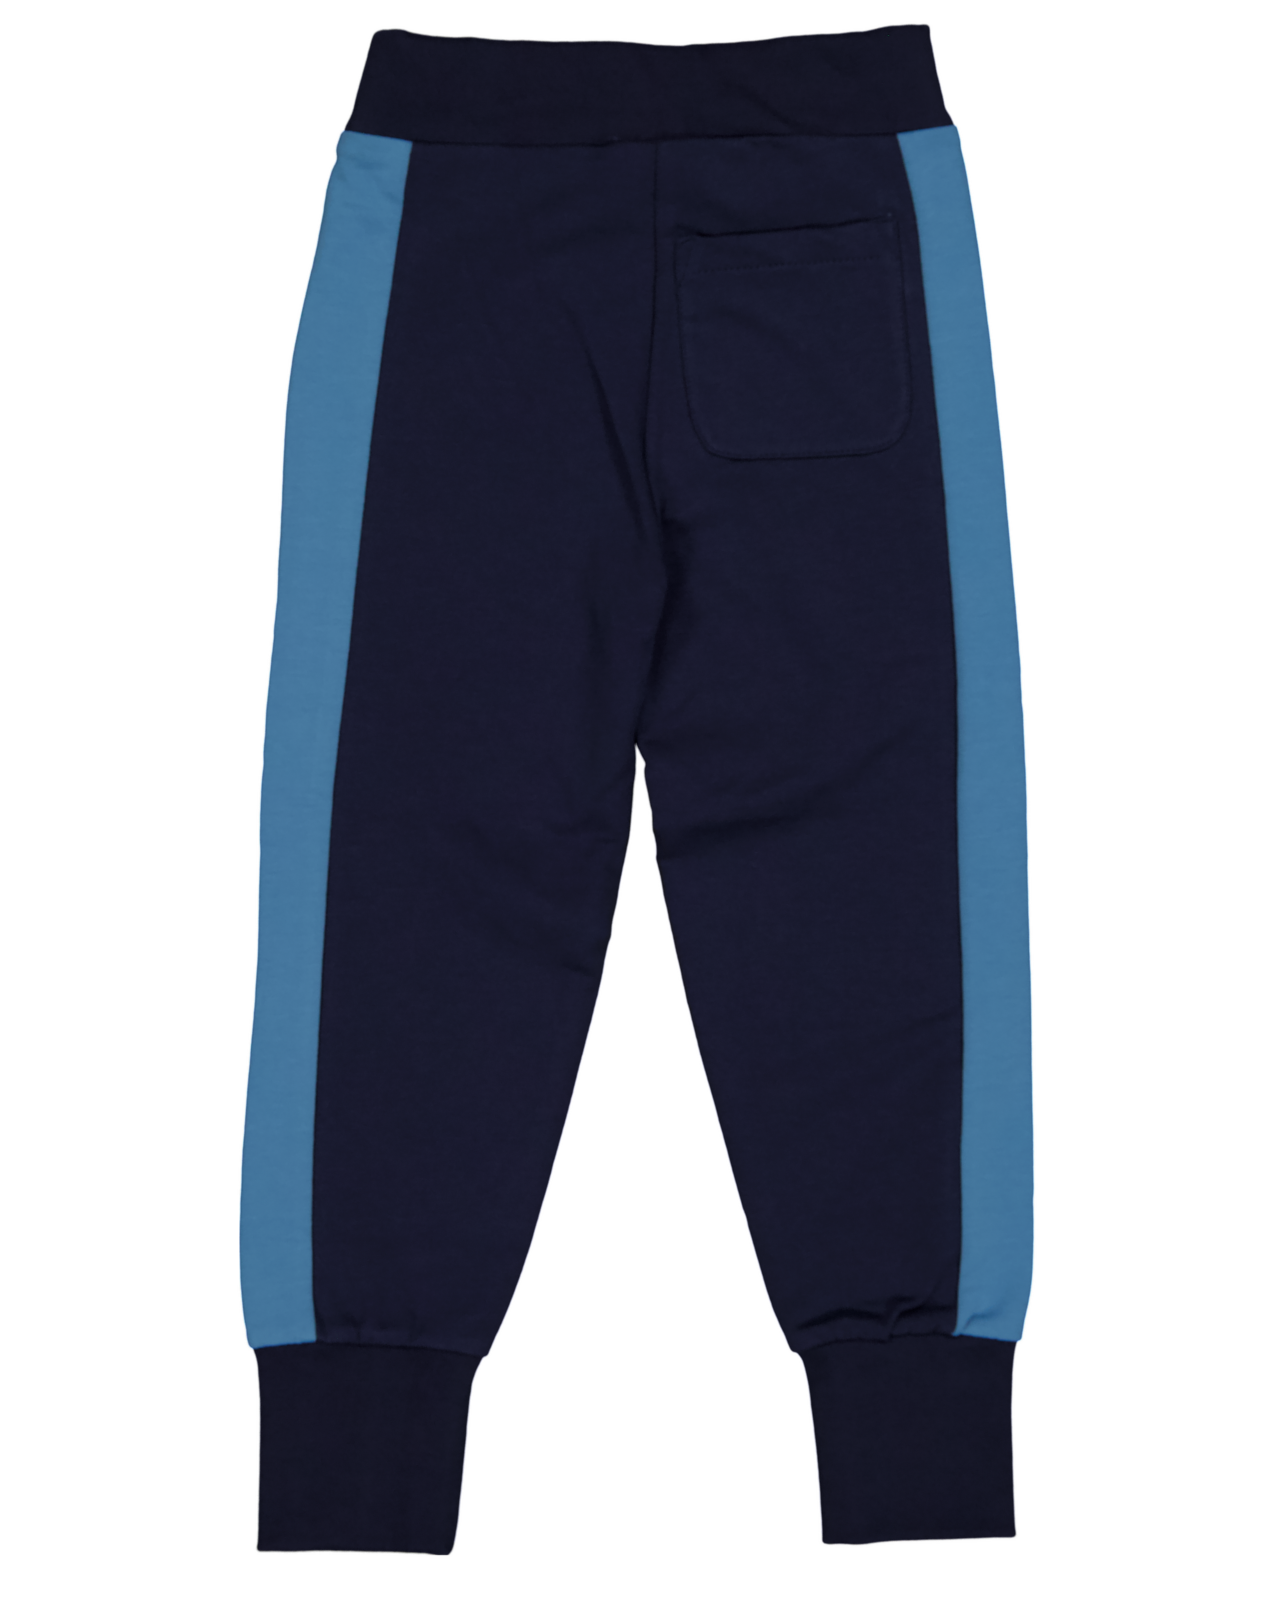 College pants Navy 86/92